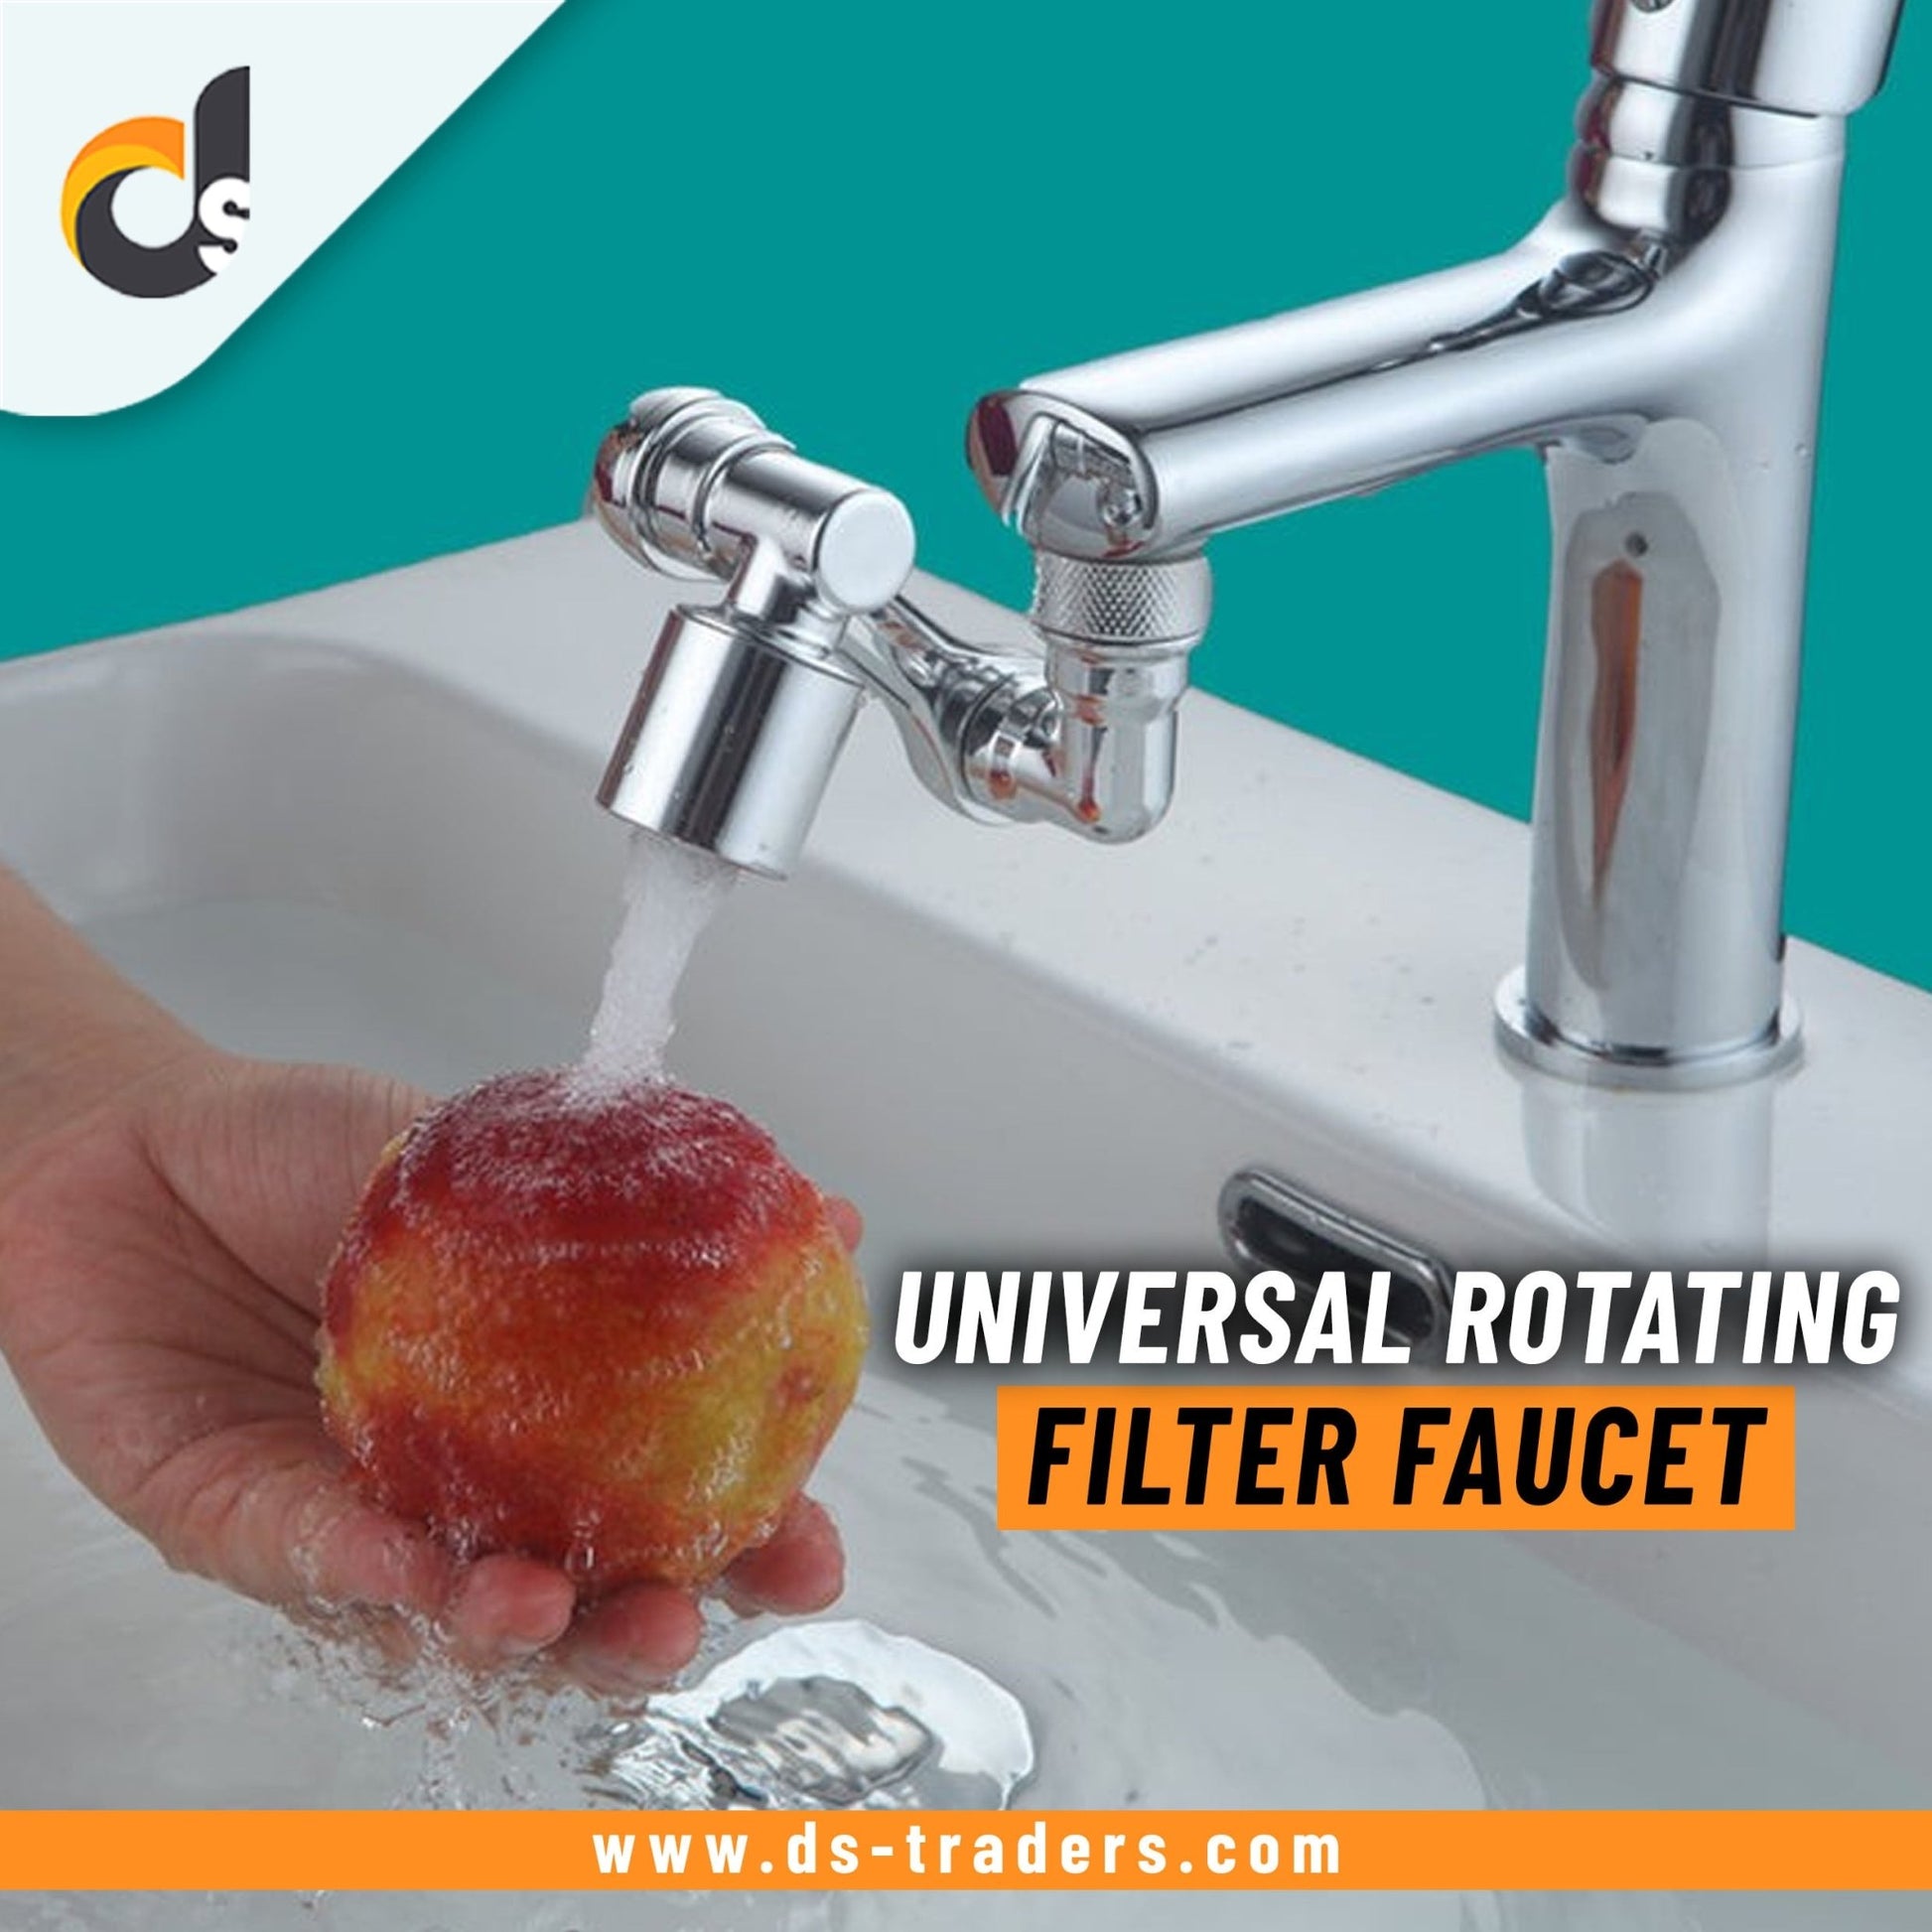 Universal Rotating Splash Filter Faucet - DS Traders